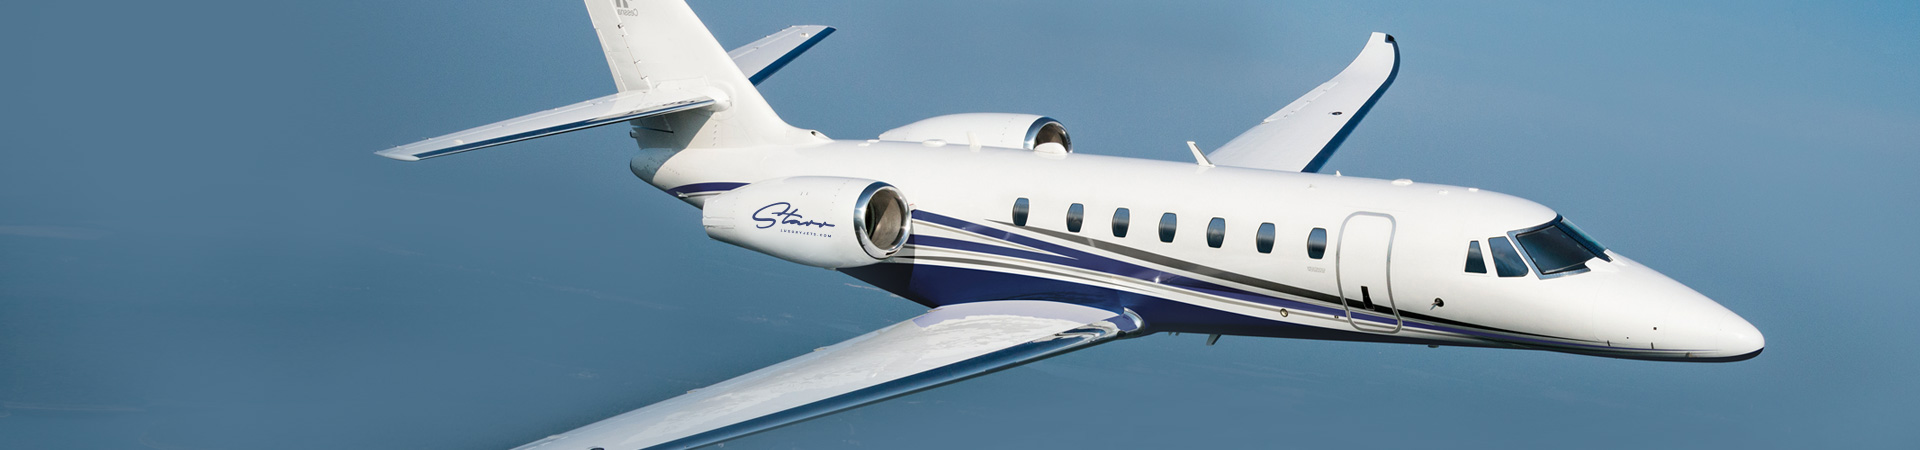 Starr Luxury Jets Medium Private Jet Aircraft Hire